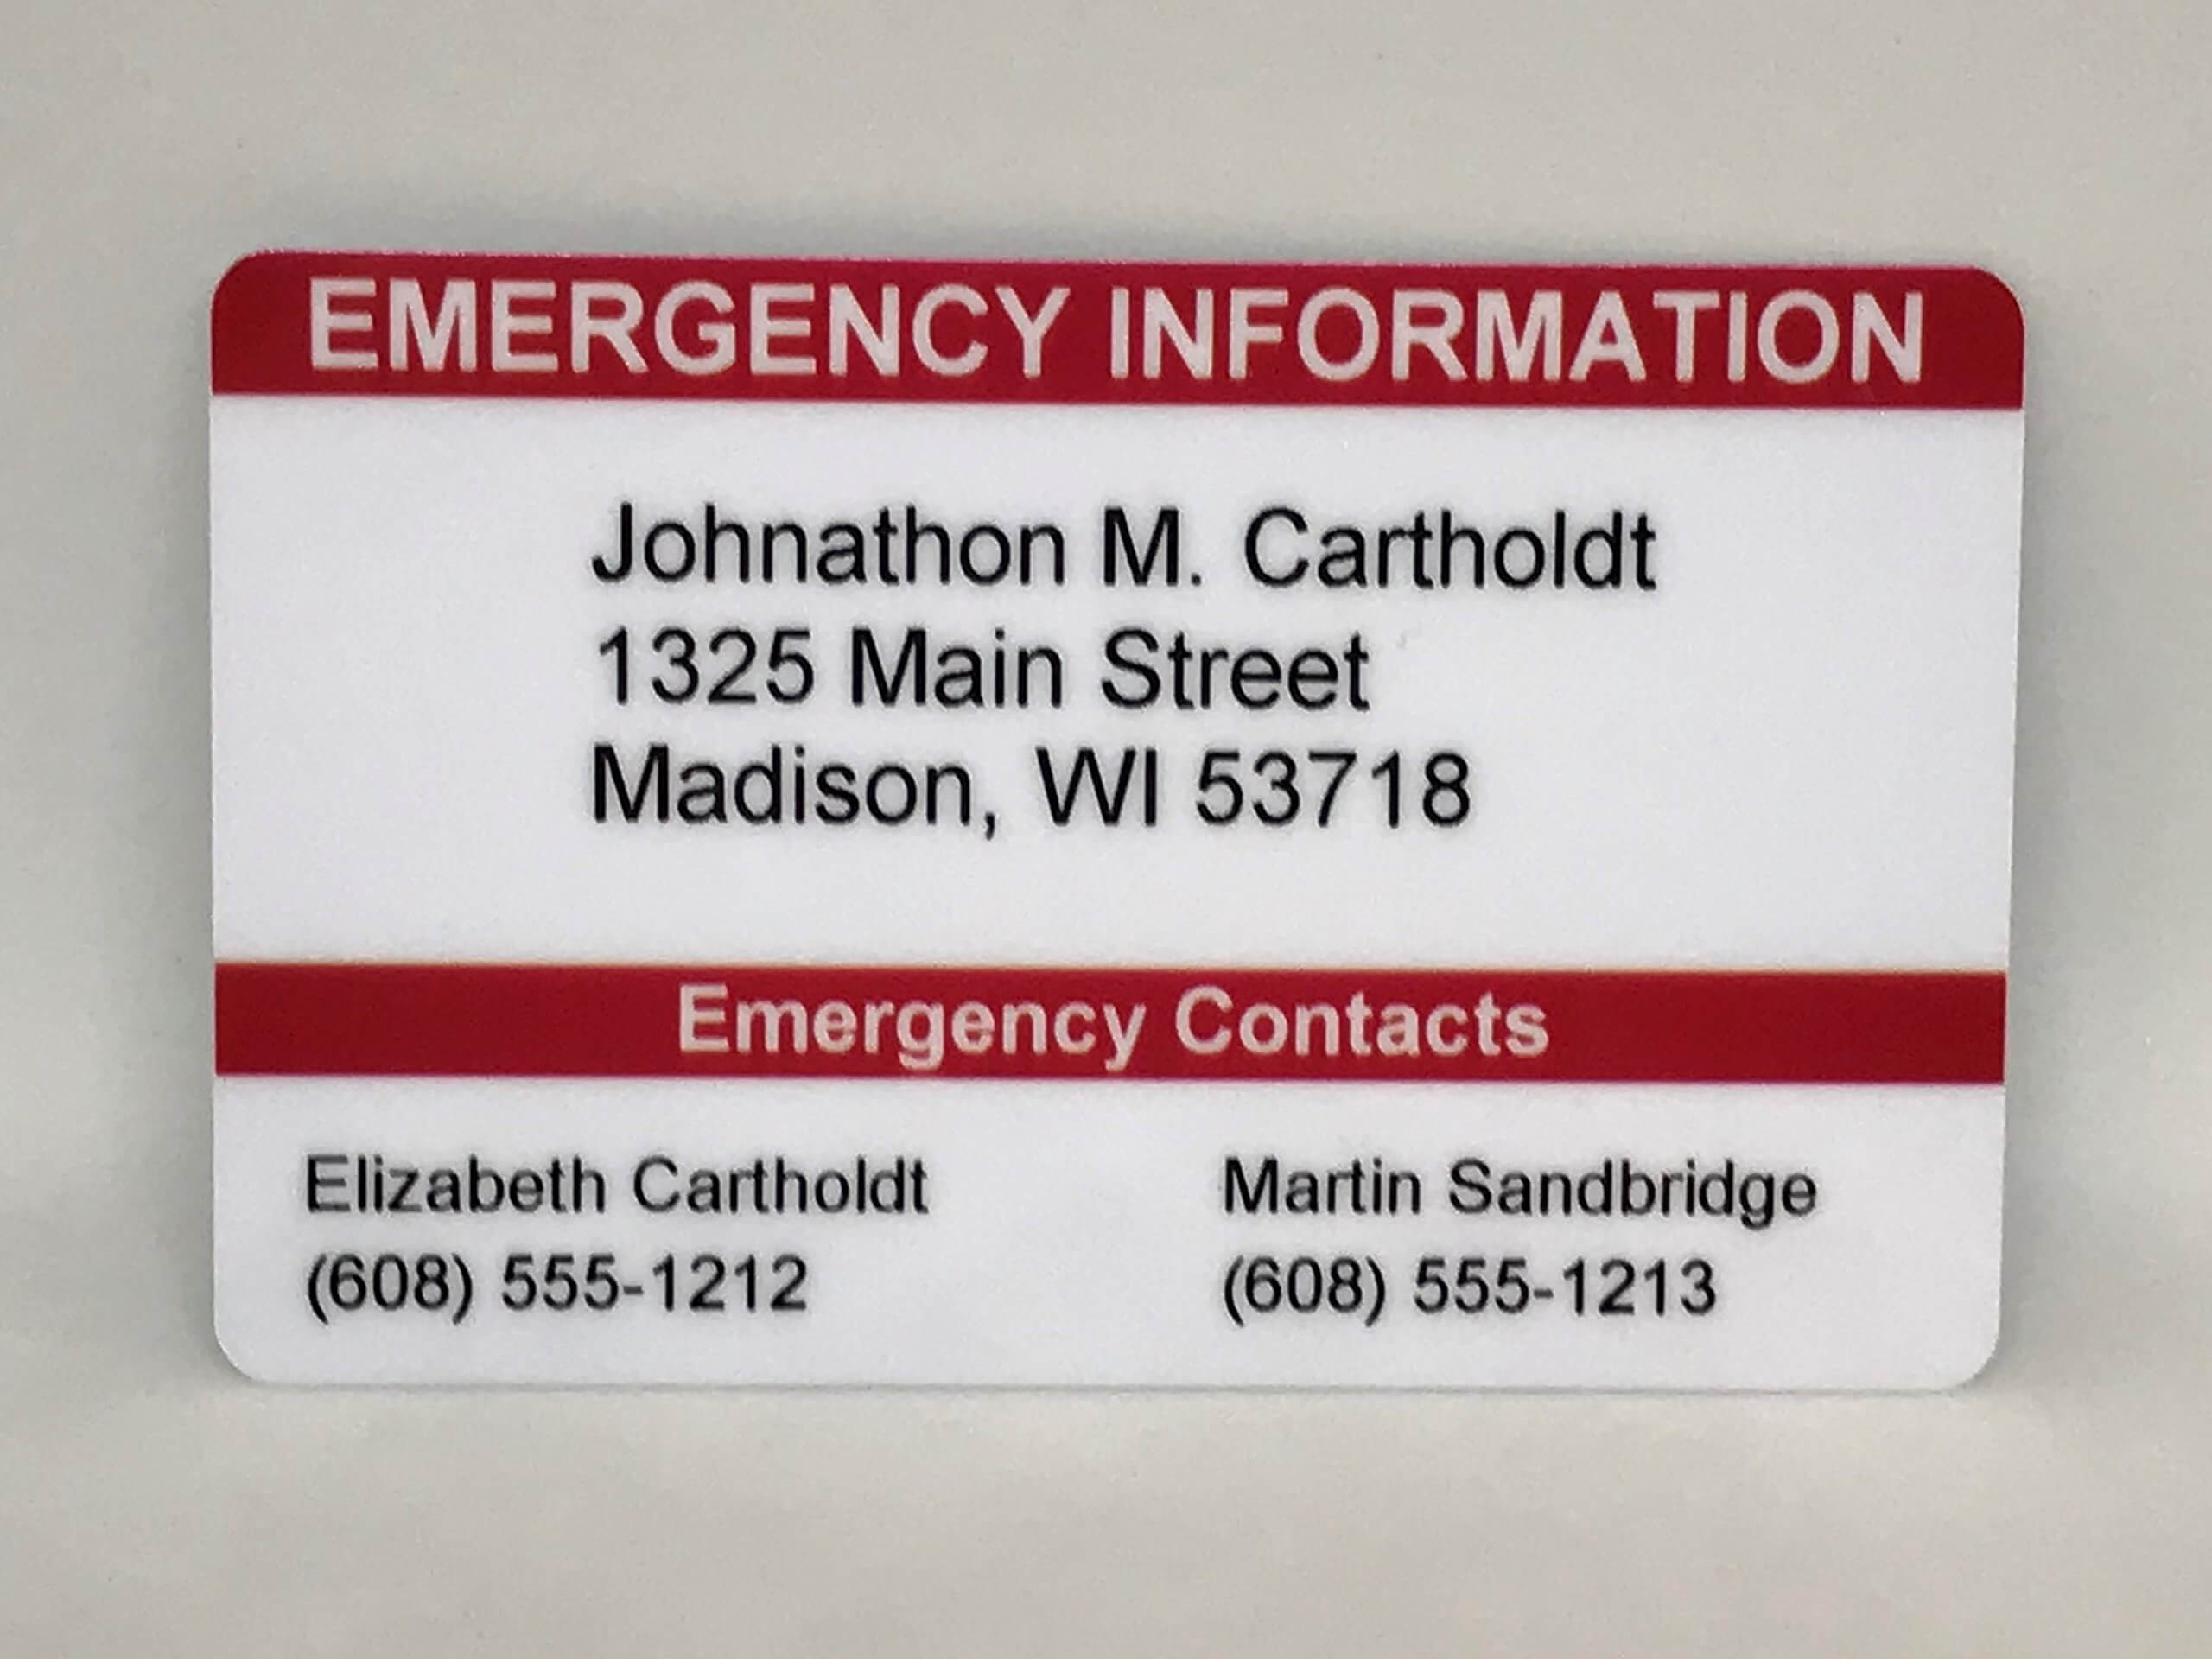 Cheap Emergency Identification, Find Emergency In Medical Alert Wallet Card Template